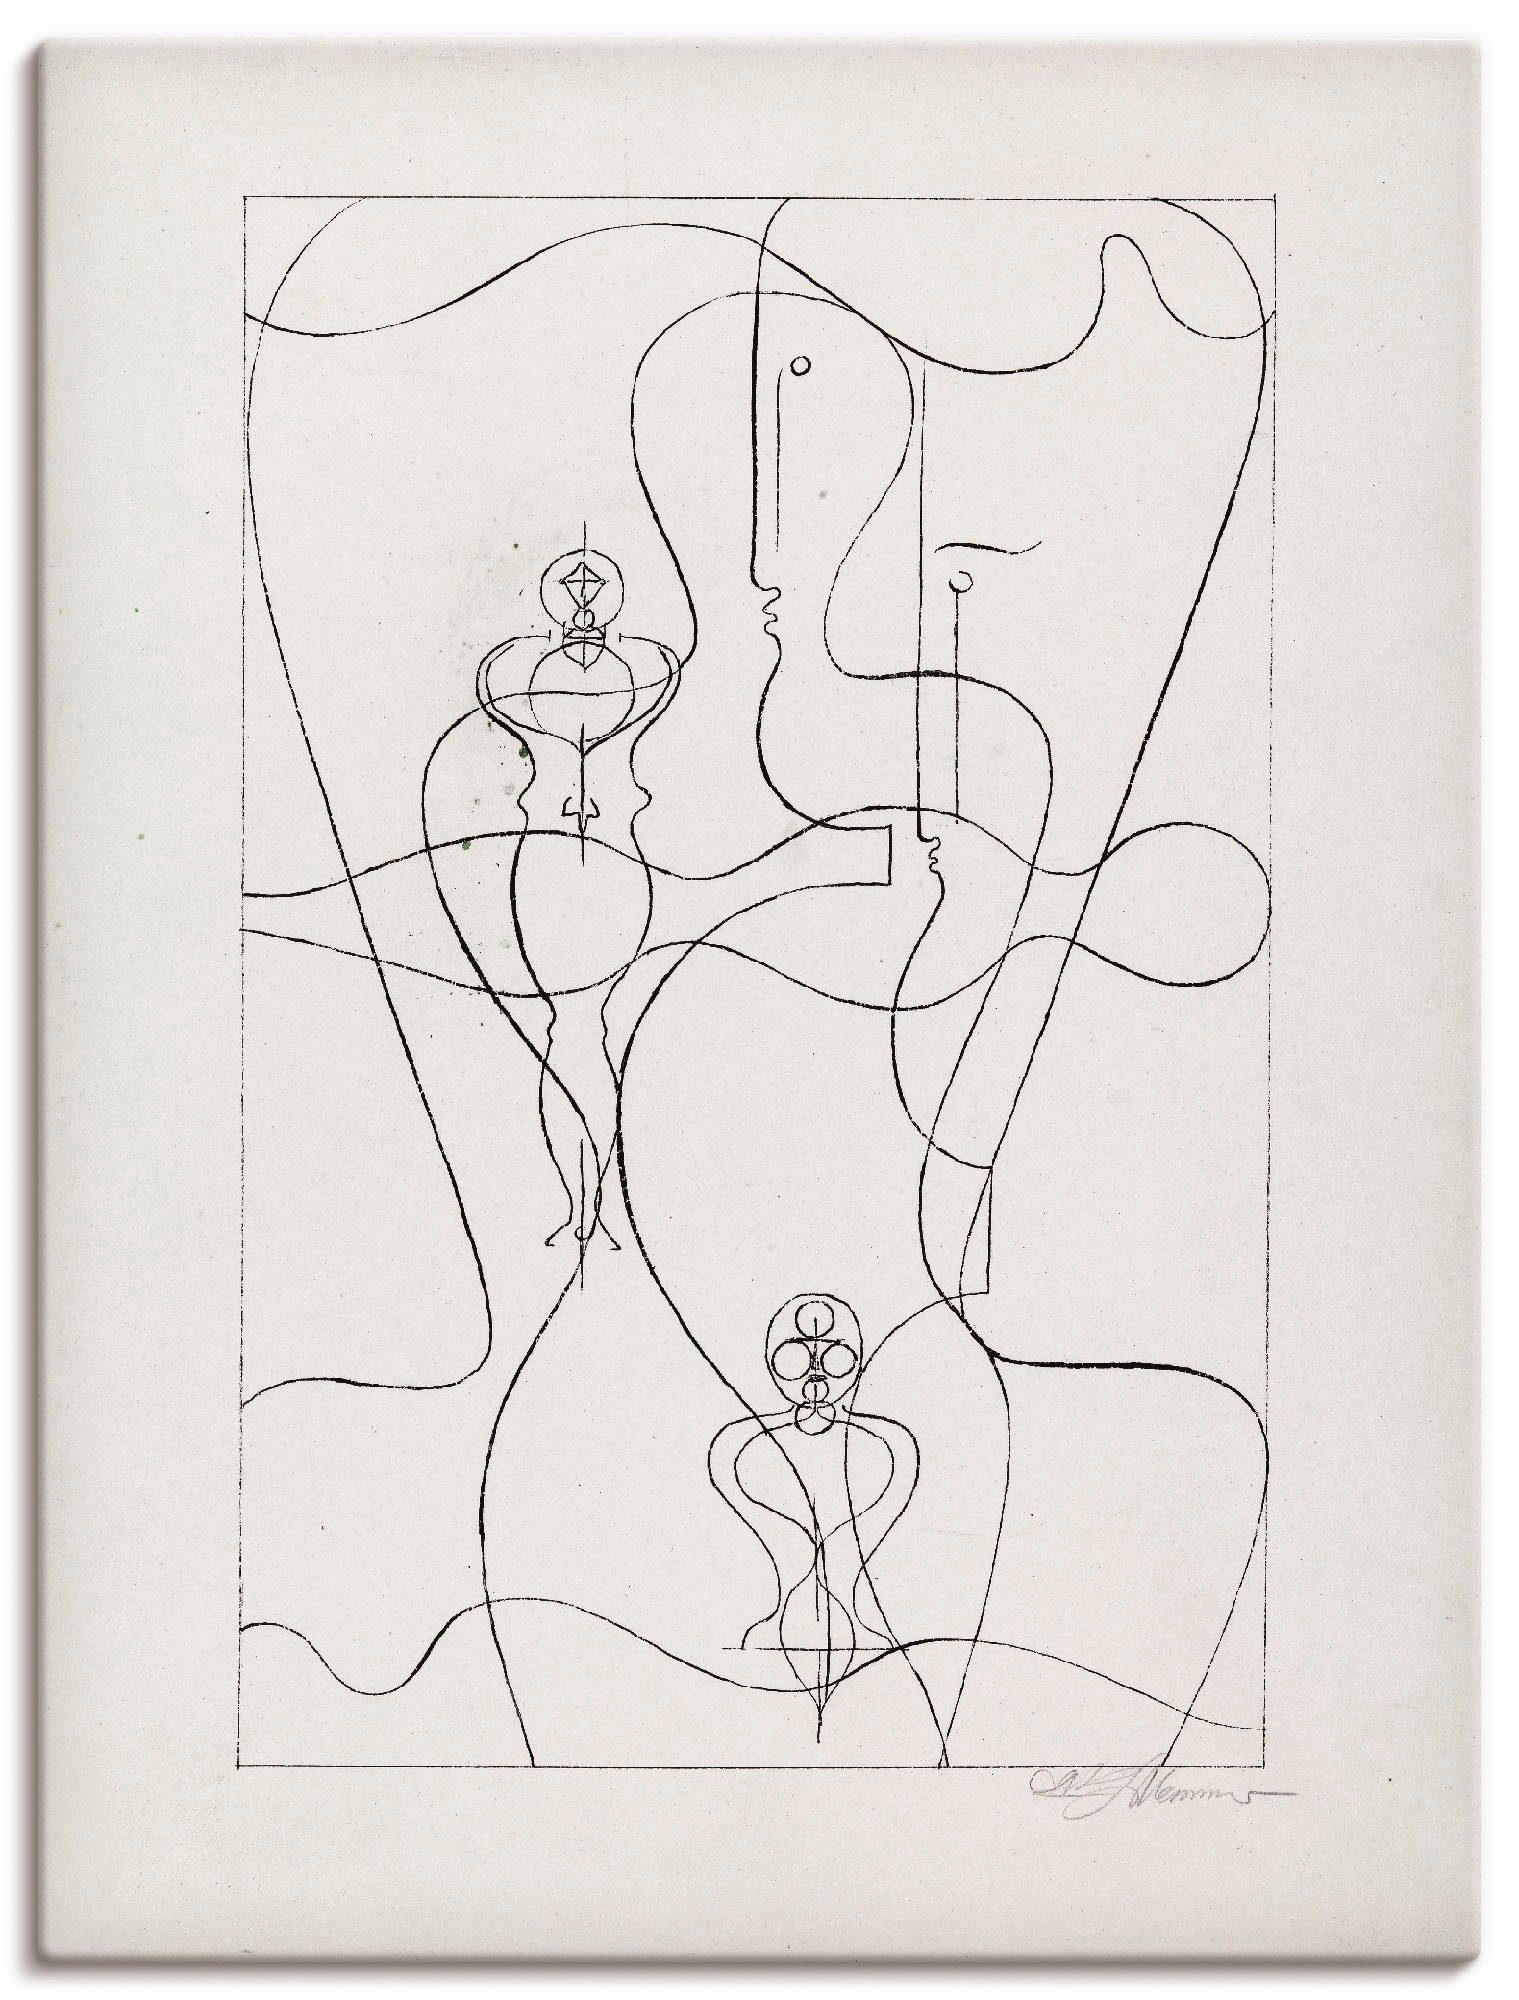 Artland Artprint Figurenplan. 1920 (1 stuk)